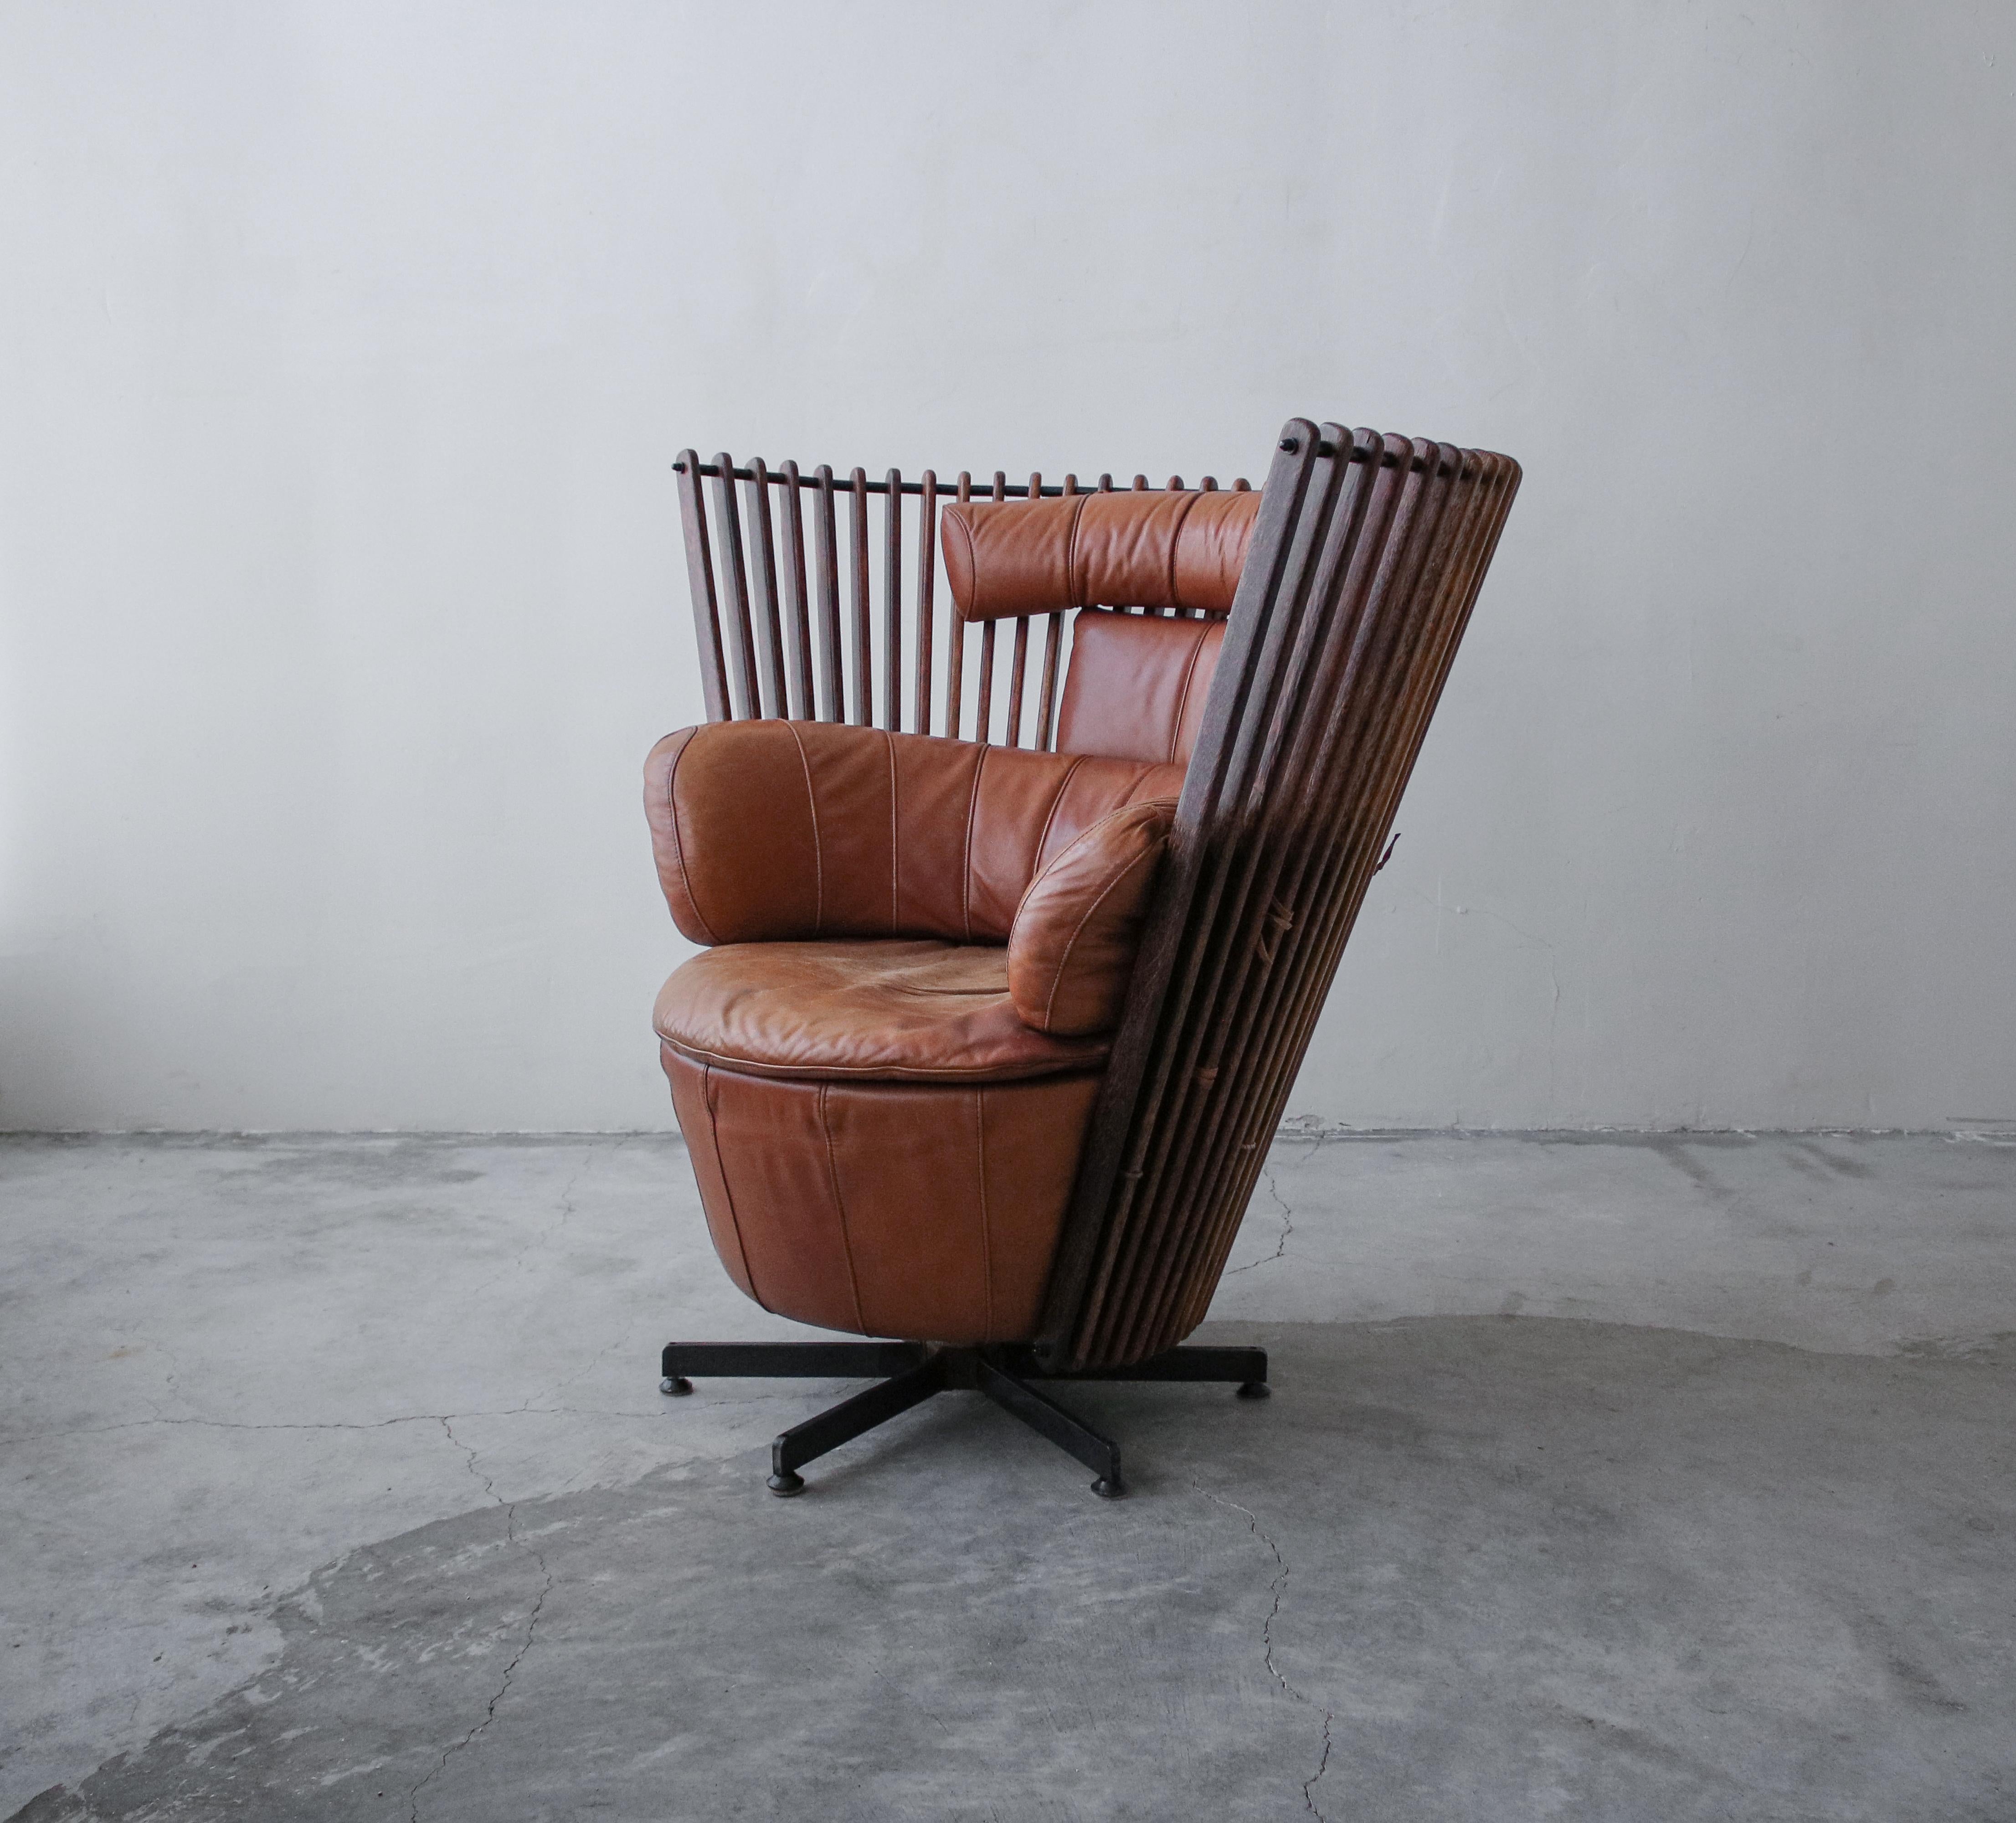 palm wood chair